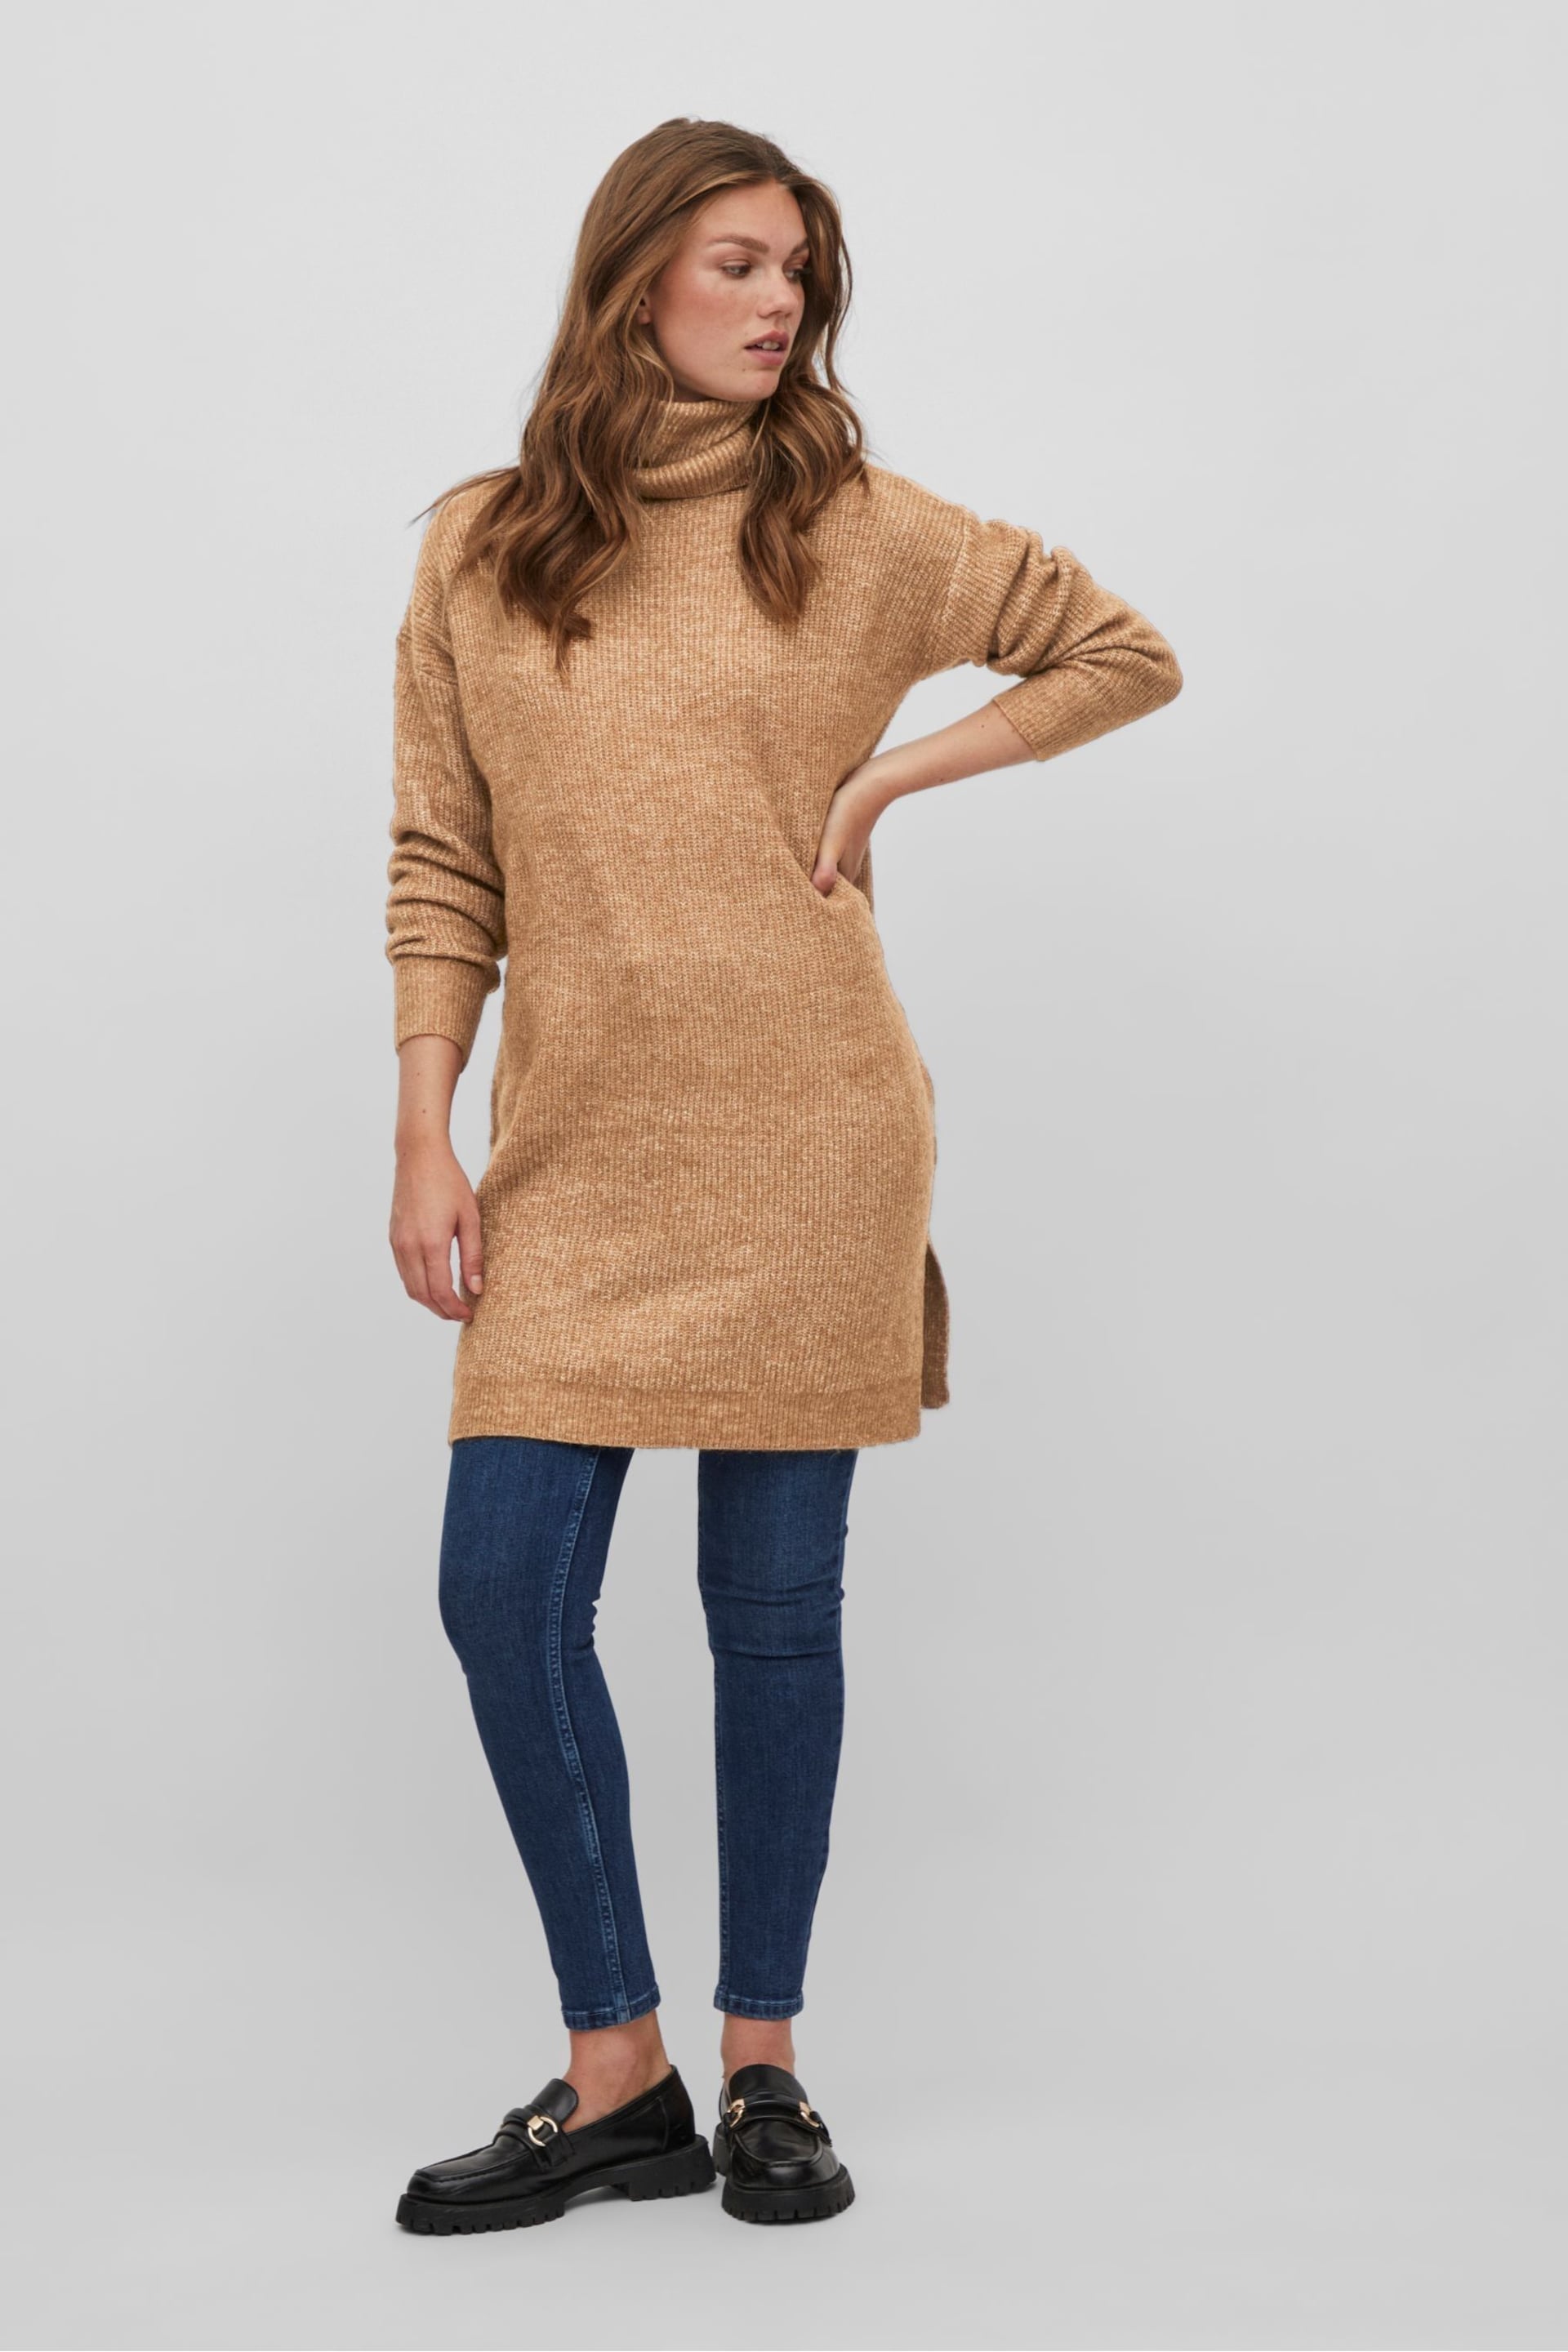 VILA Camel Roll Neck Knitted Dress - Image 2 of 5